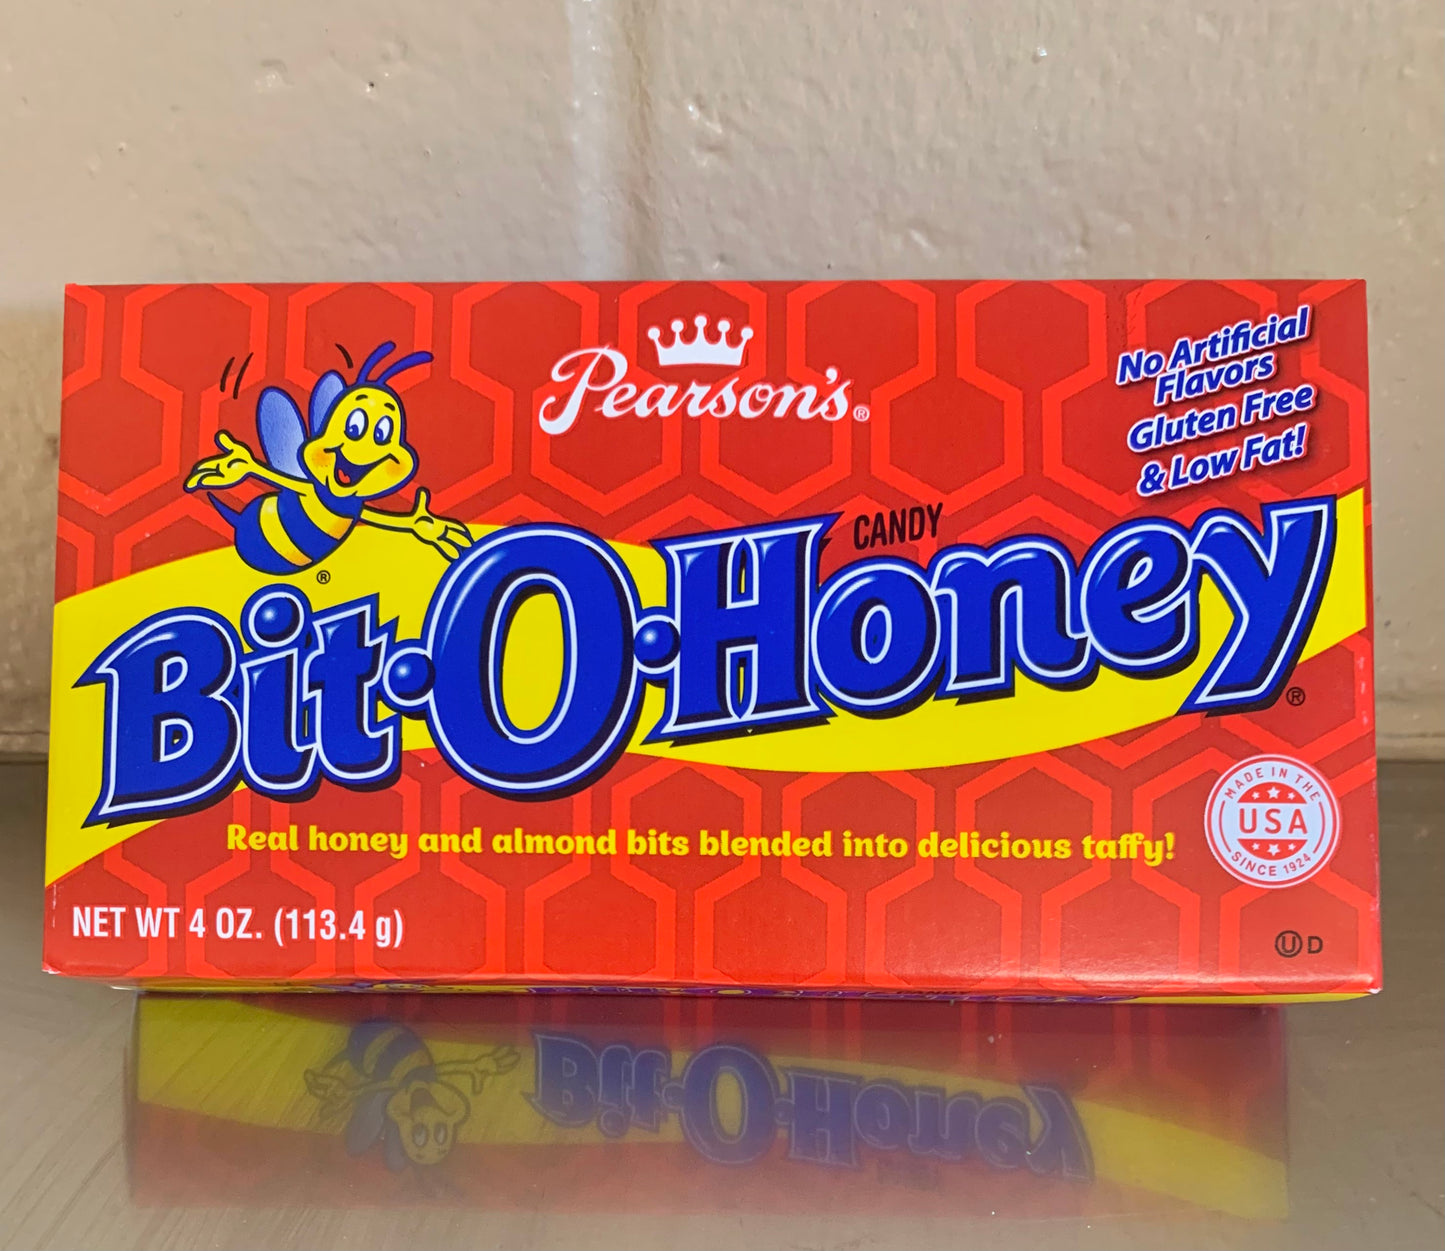 Bit-o-Honey